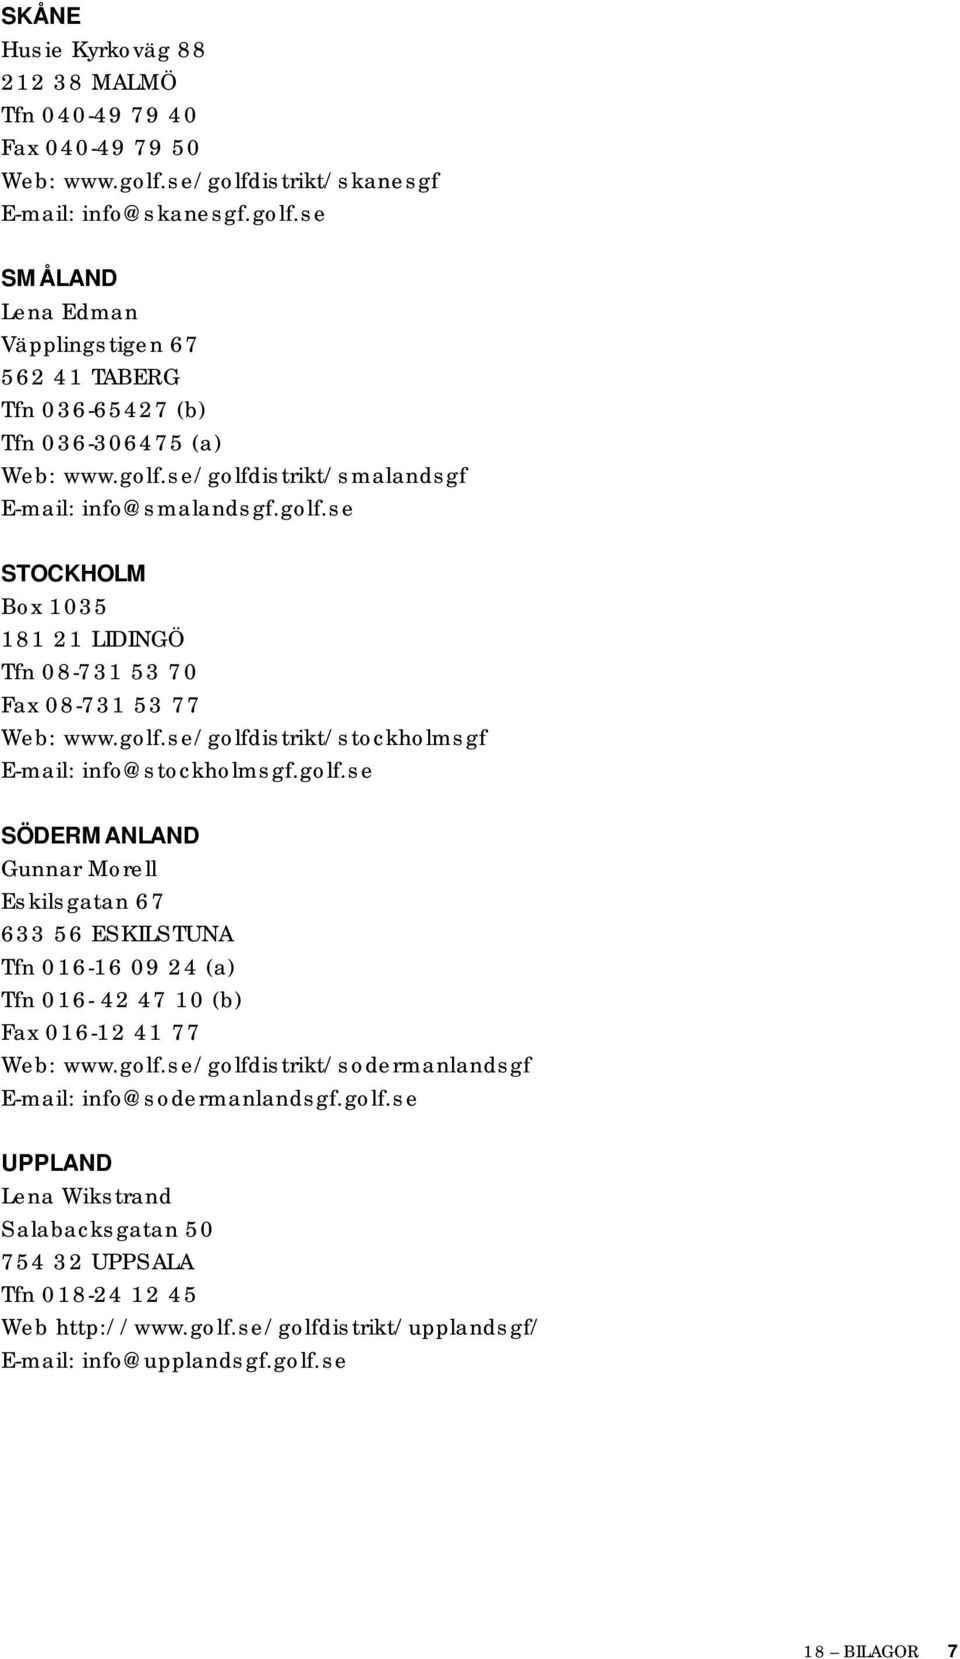 golf.se SÖDERMANLAND Gunnar Morell Eskilsgatan 67 633 56 ESKILSTUNA Tfn 016-16 09 24 (a) Tfn 016-42 47 10 (b) Fax 016-12 41 77 Web: www.golf.se/golfdistrikt/sodermanlandsgf E-mail: info@sodermanlandsgf.